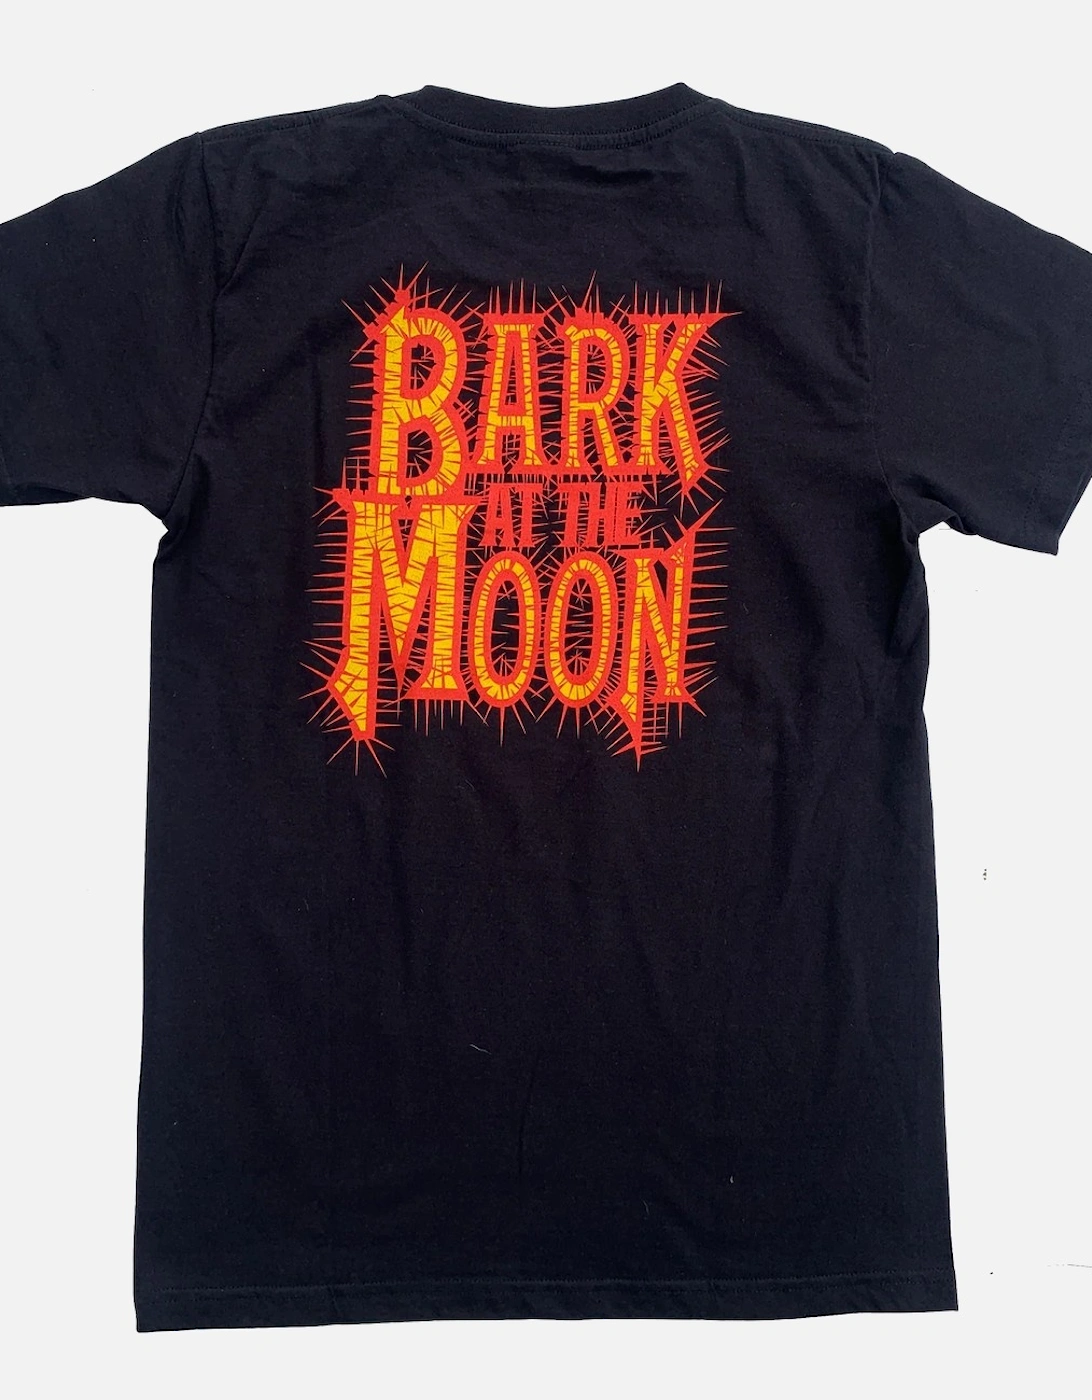 Unisex Adult Bark at the Moon T-Shirt